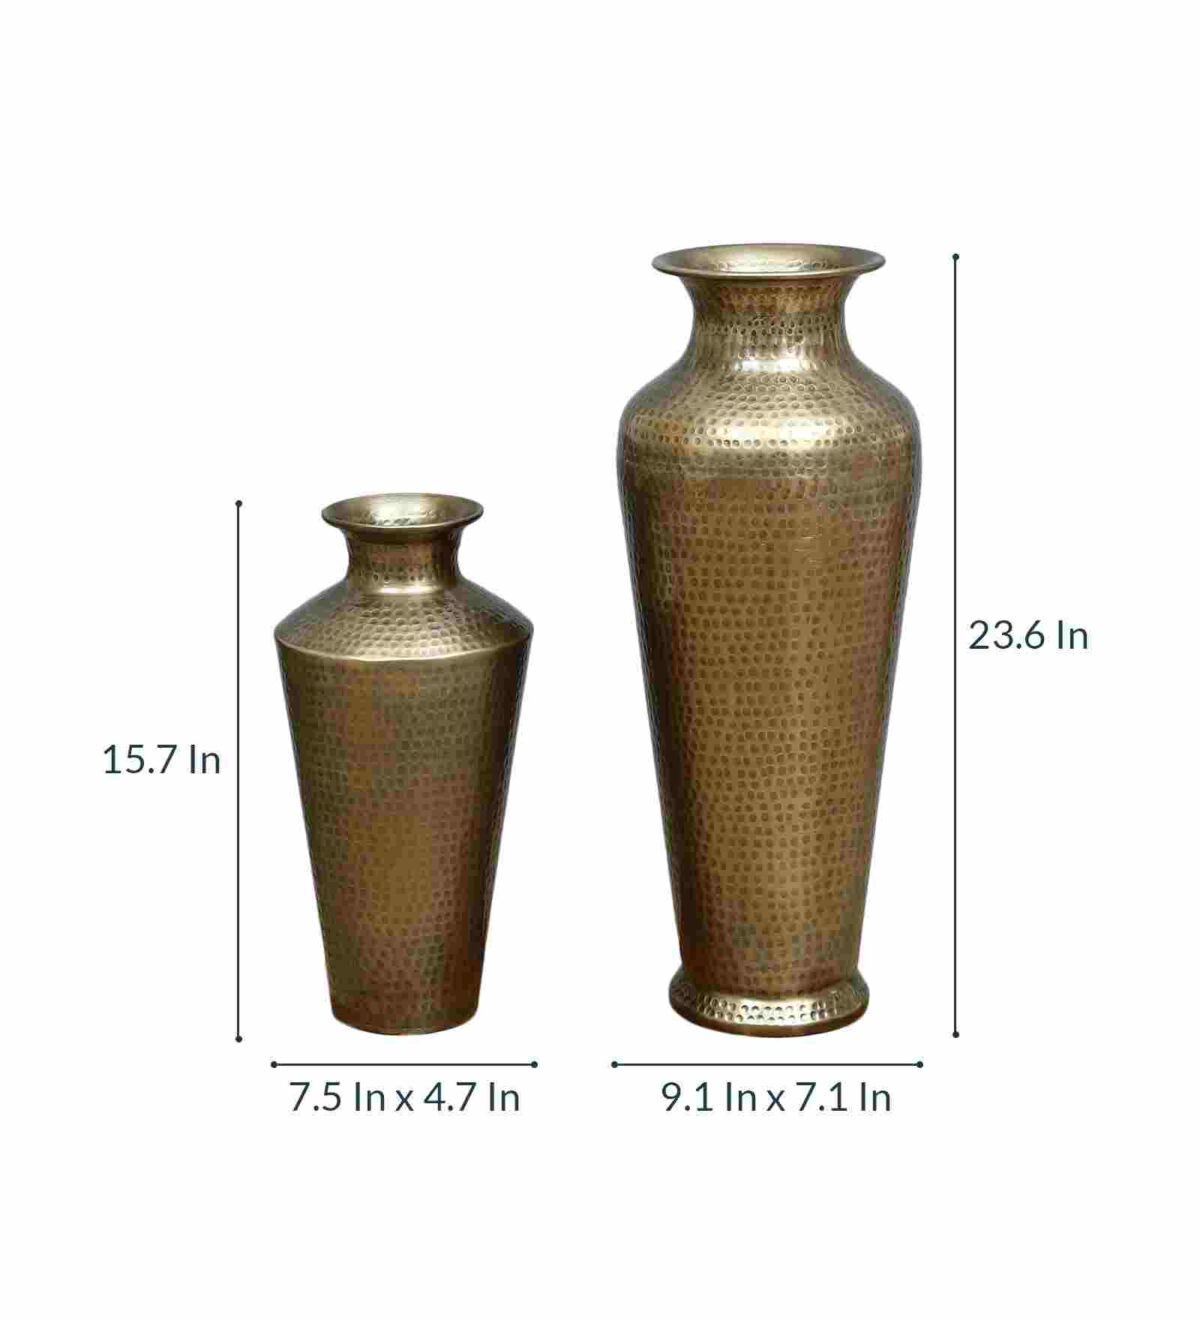 brass aluminium old pot set of 2 by homedfy brass aluminium old pot set of 2 by homedfy q2mhom